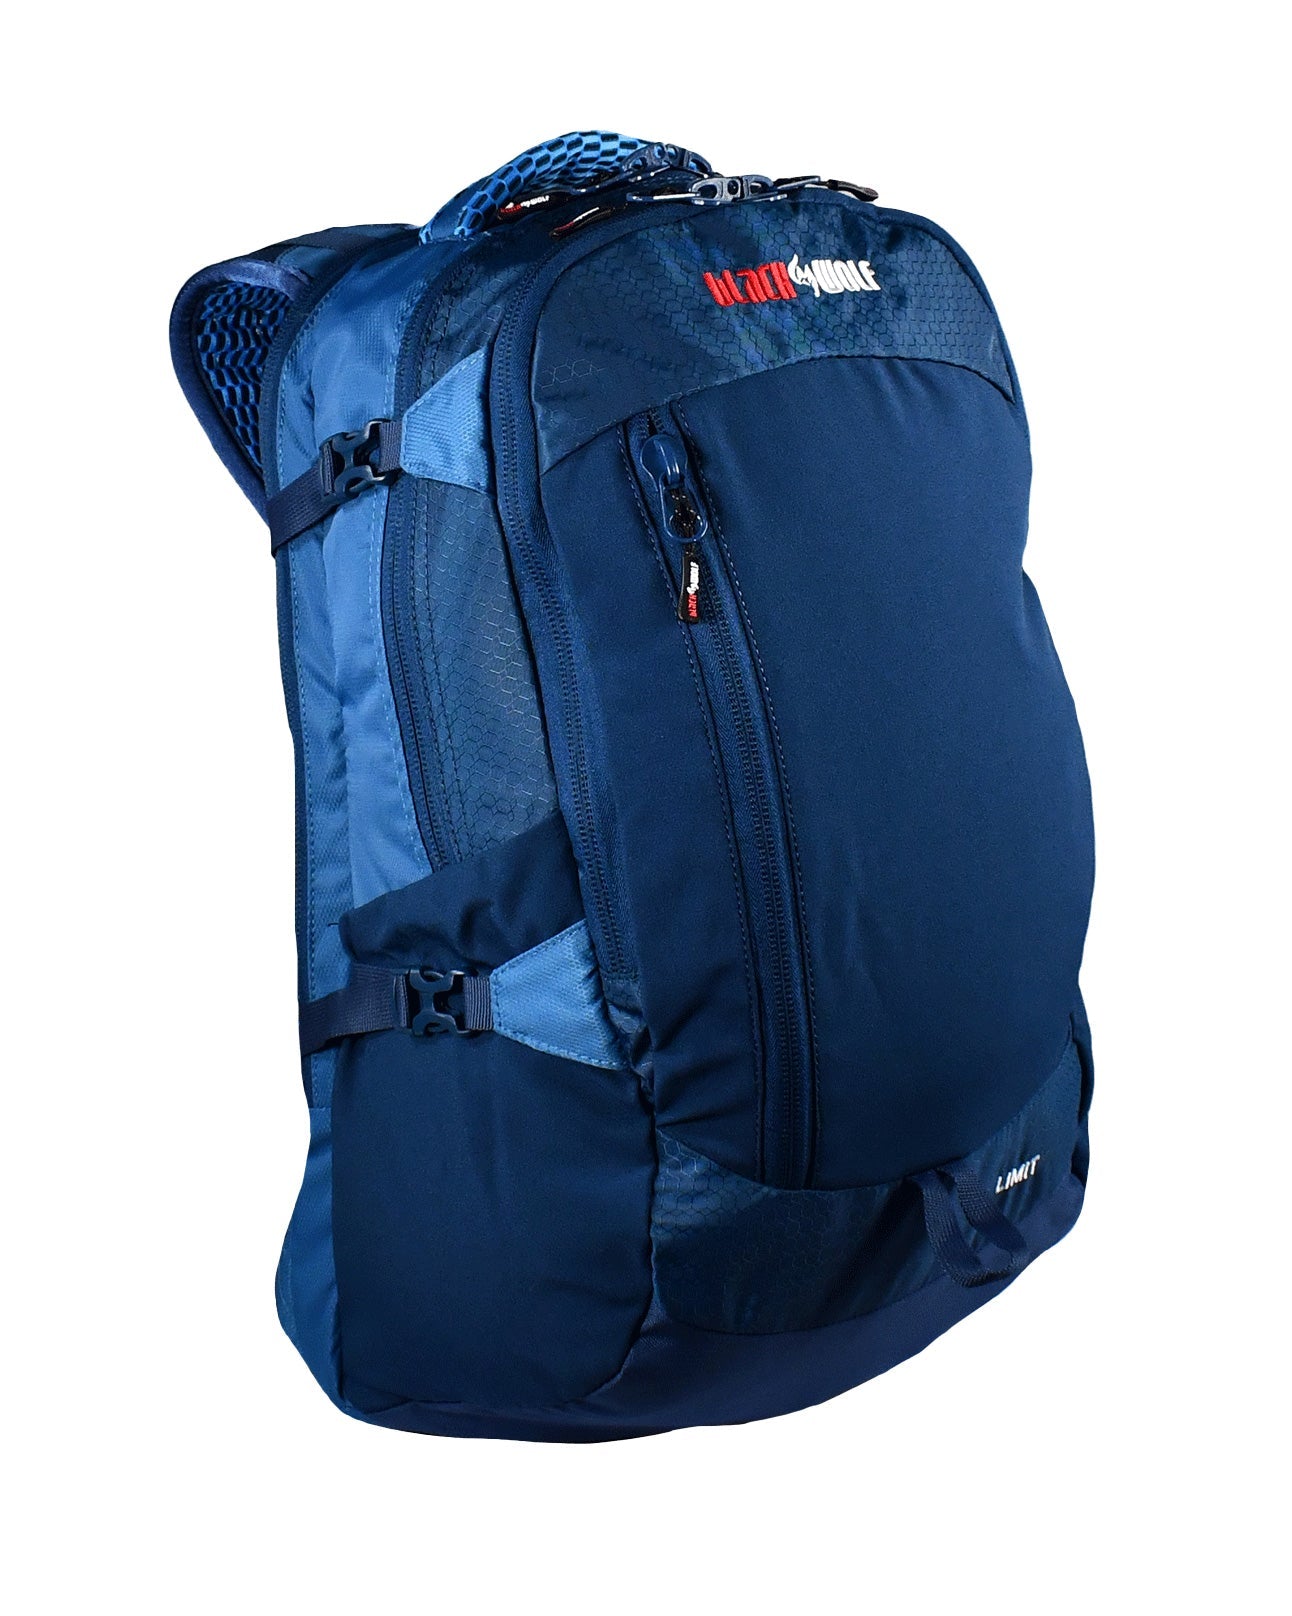 Limit Backpack